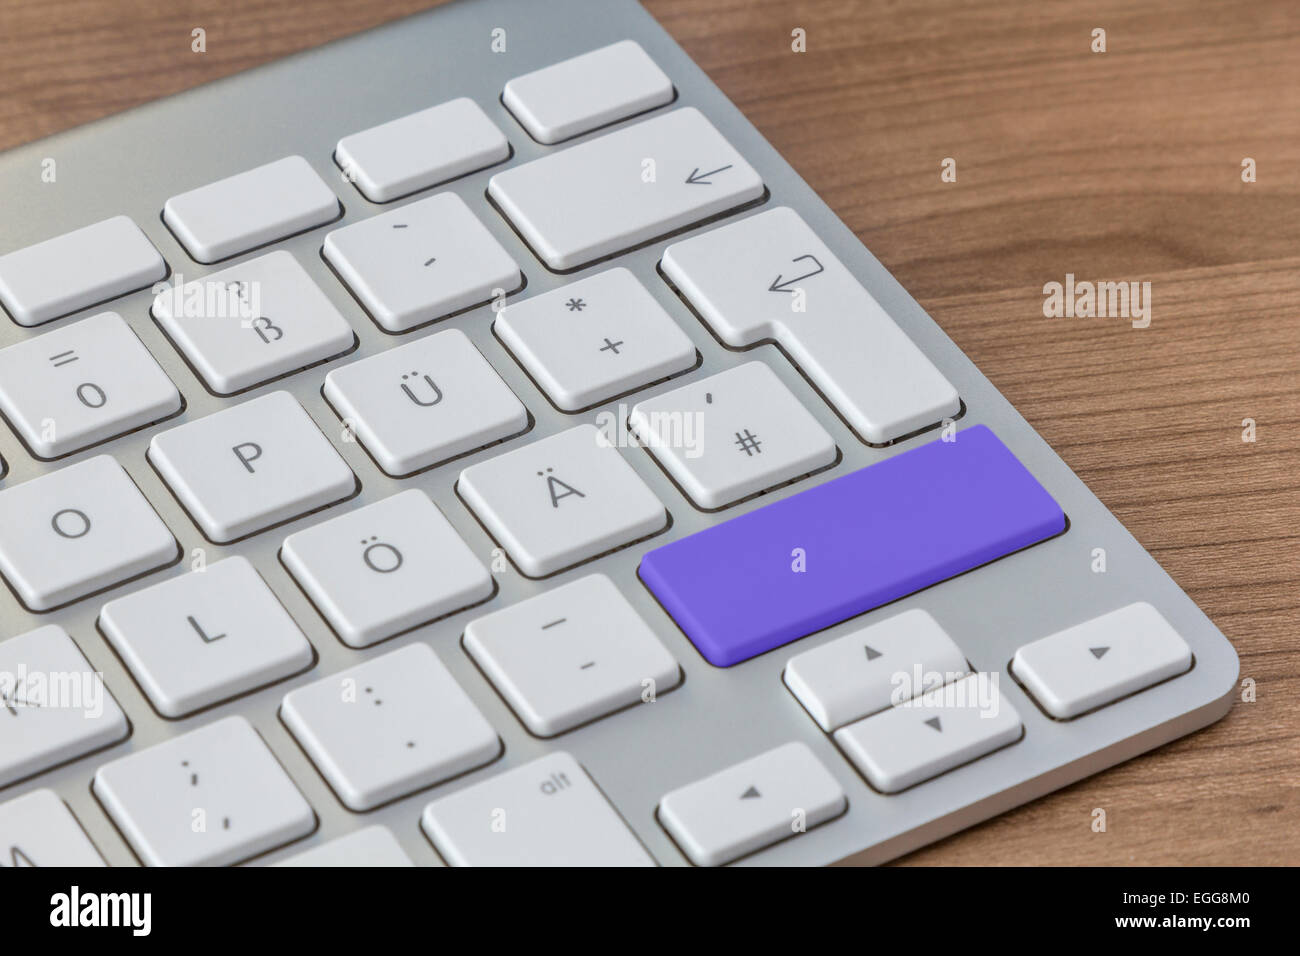 Large blue button of a modern keyboard on a wooden desktop Stock Photo